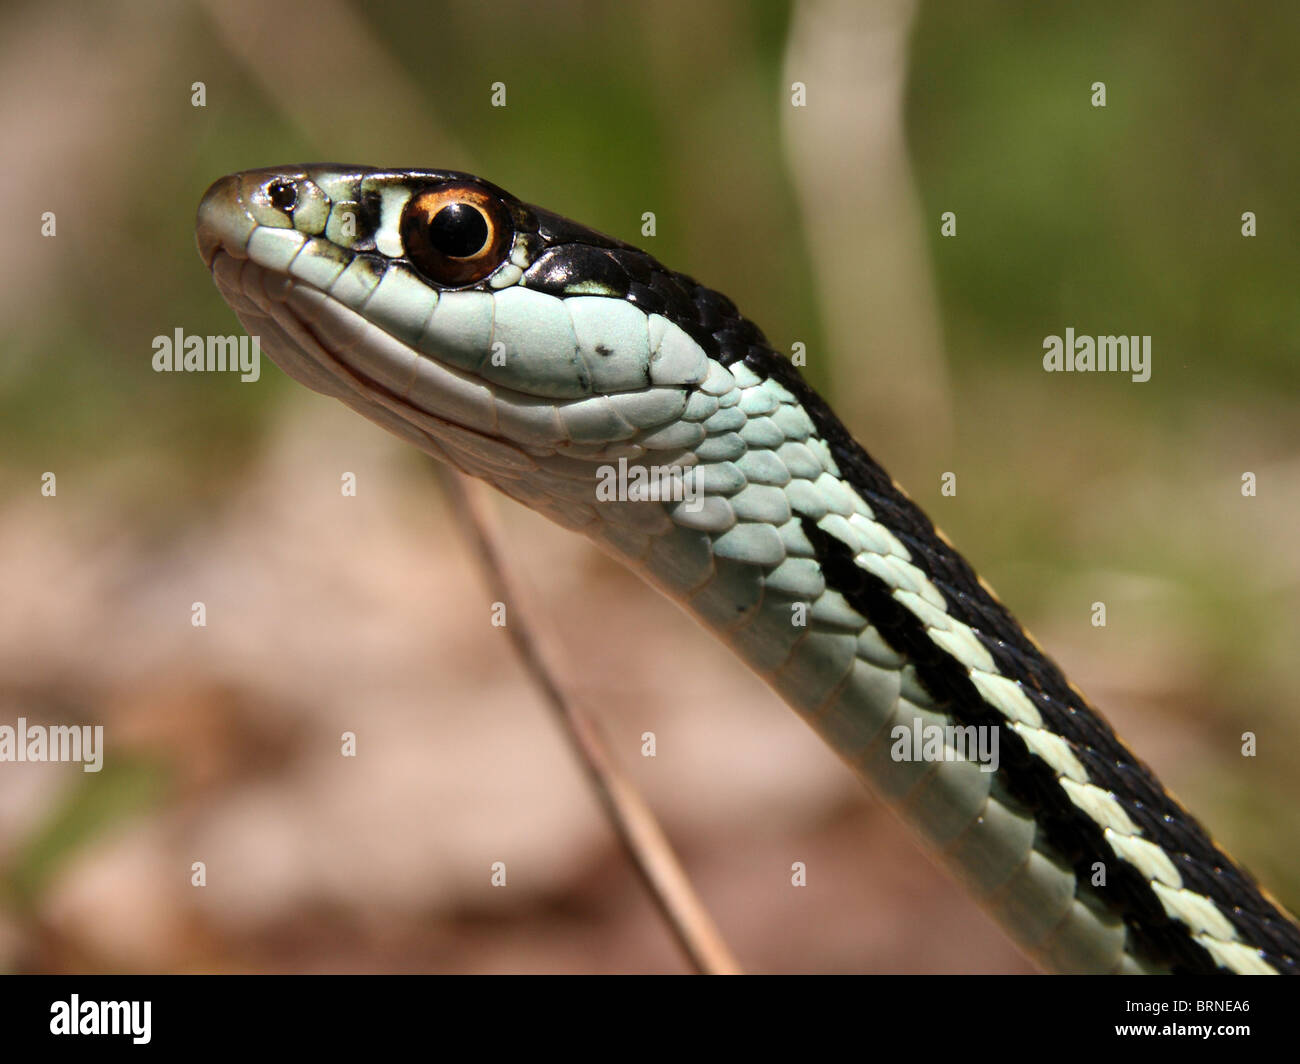 Western Ribbon Snake (Thamnophis proximus) Stock Photo